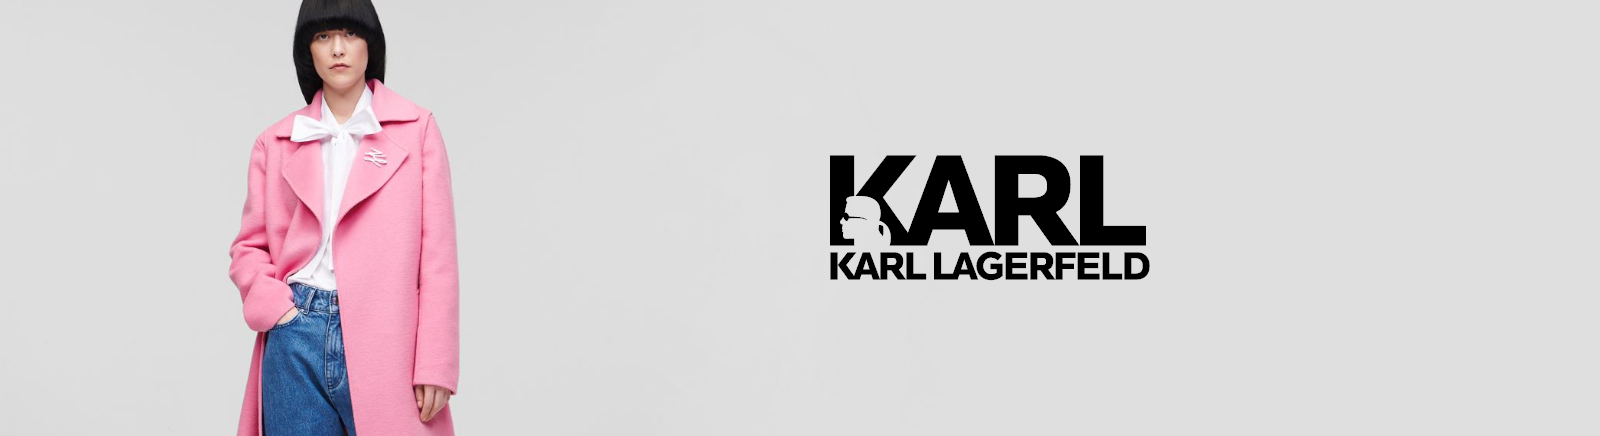 Karl Lagerfeld Schuhe & Accessoires bestellen im Juppen Shop